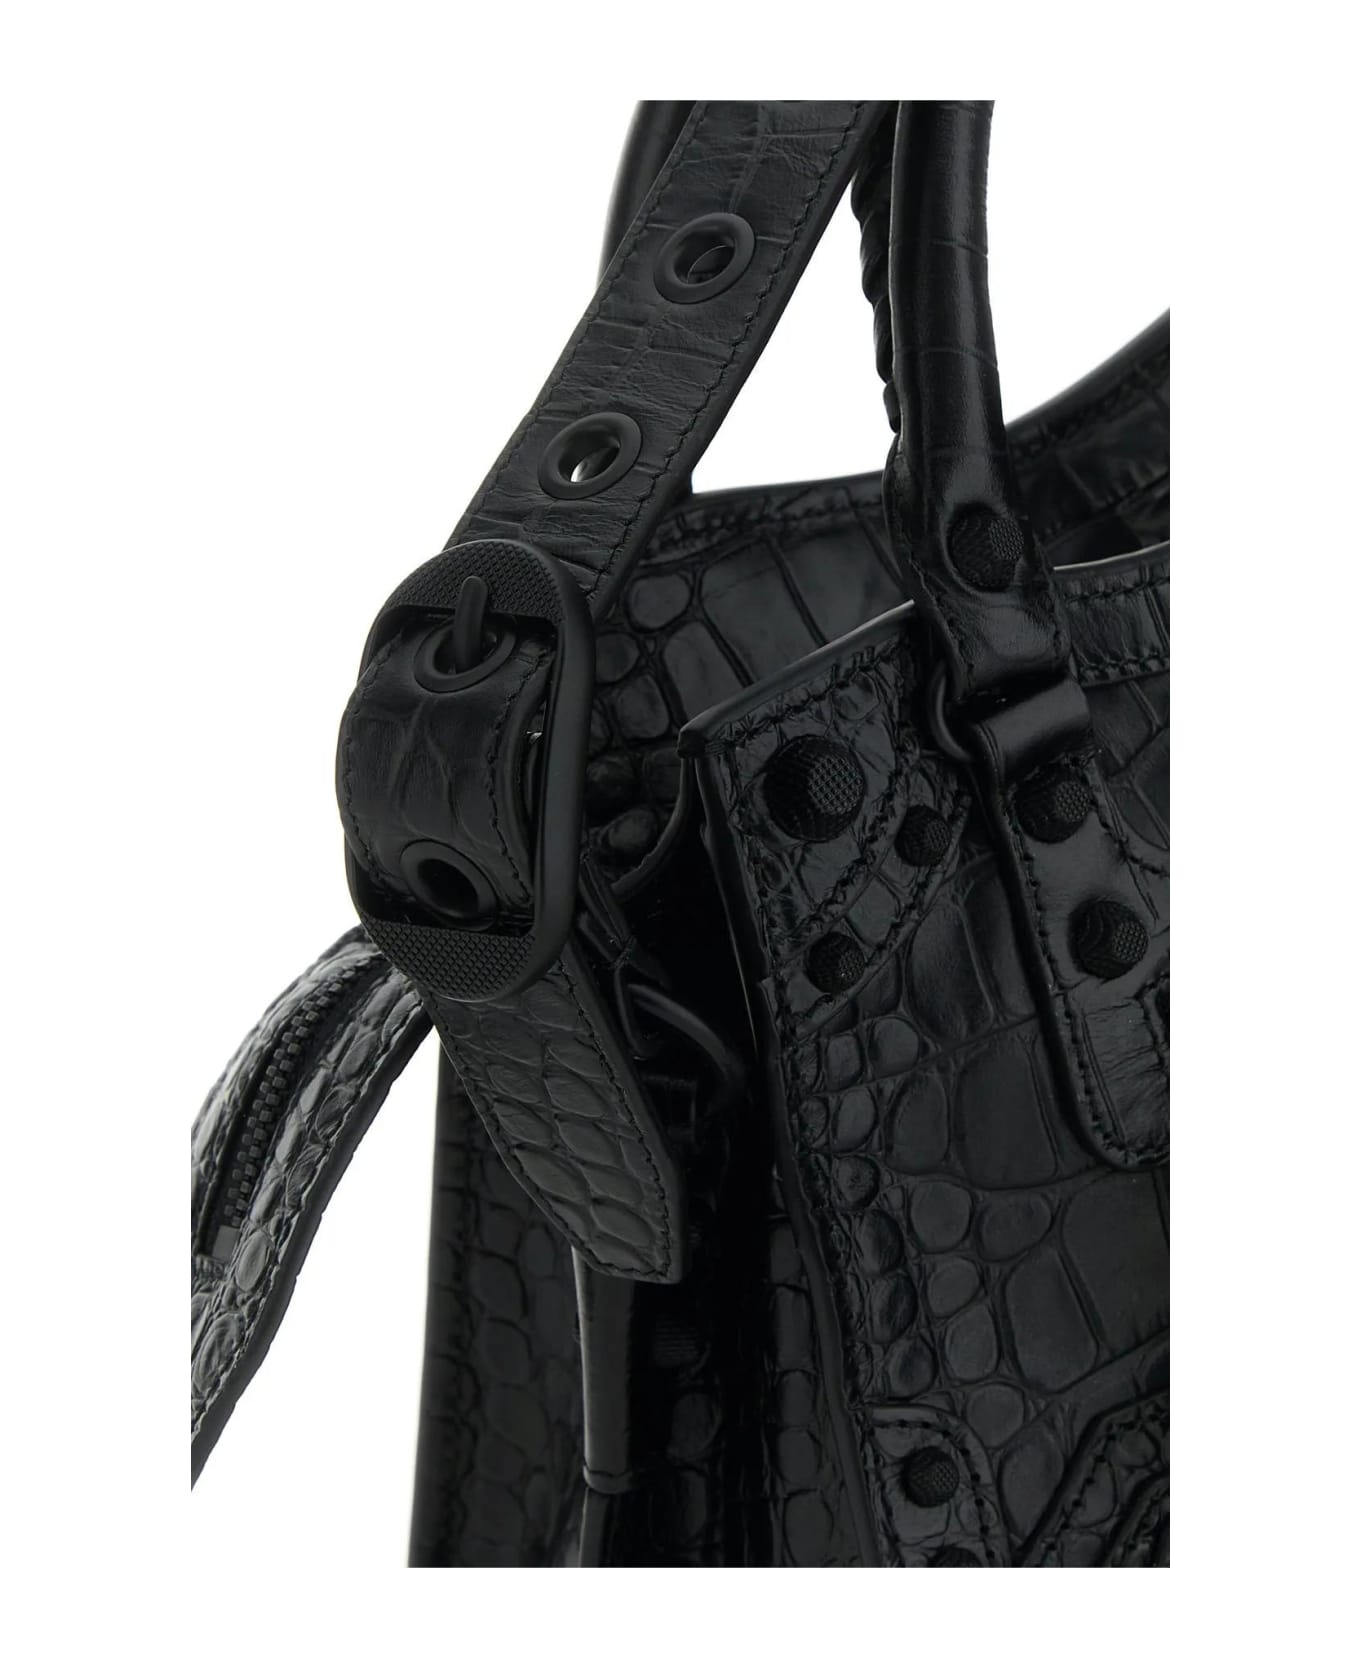 Balenciaga Black Nappa Leather Neo Cagole Xs Handbag - Black トートバッグ